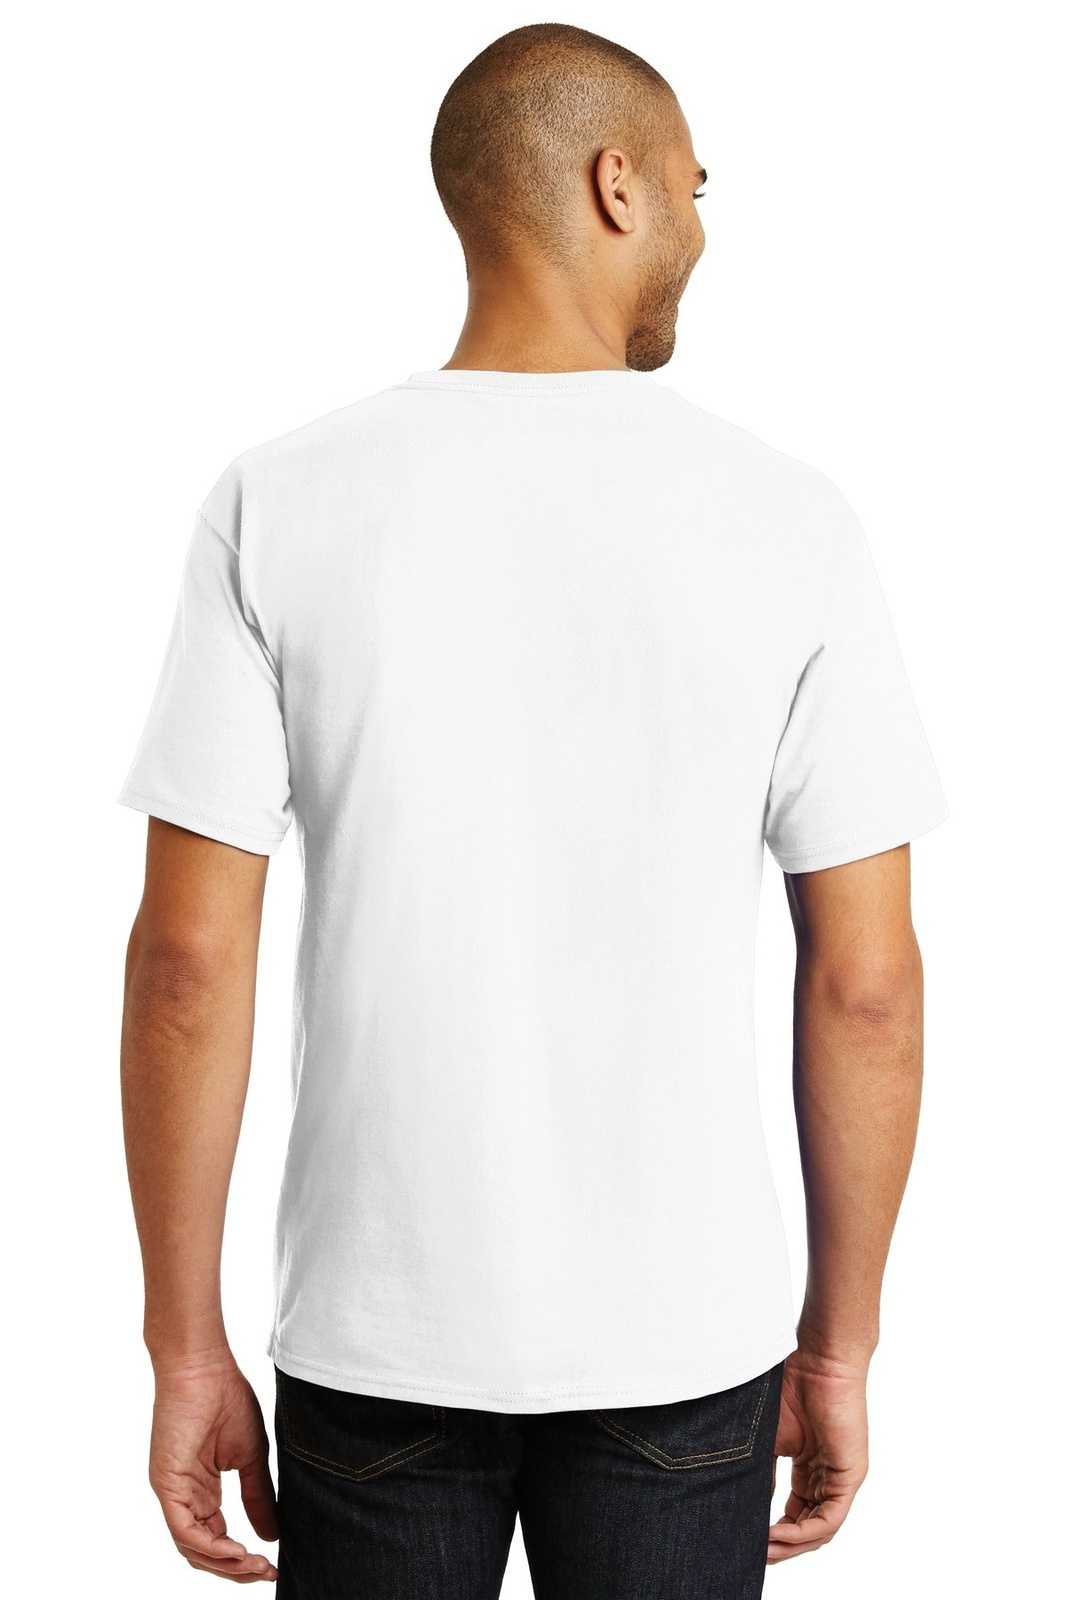 Hanes 5250 Tagless 100% Cotton T-Shirt - White - HIT a Double